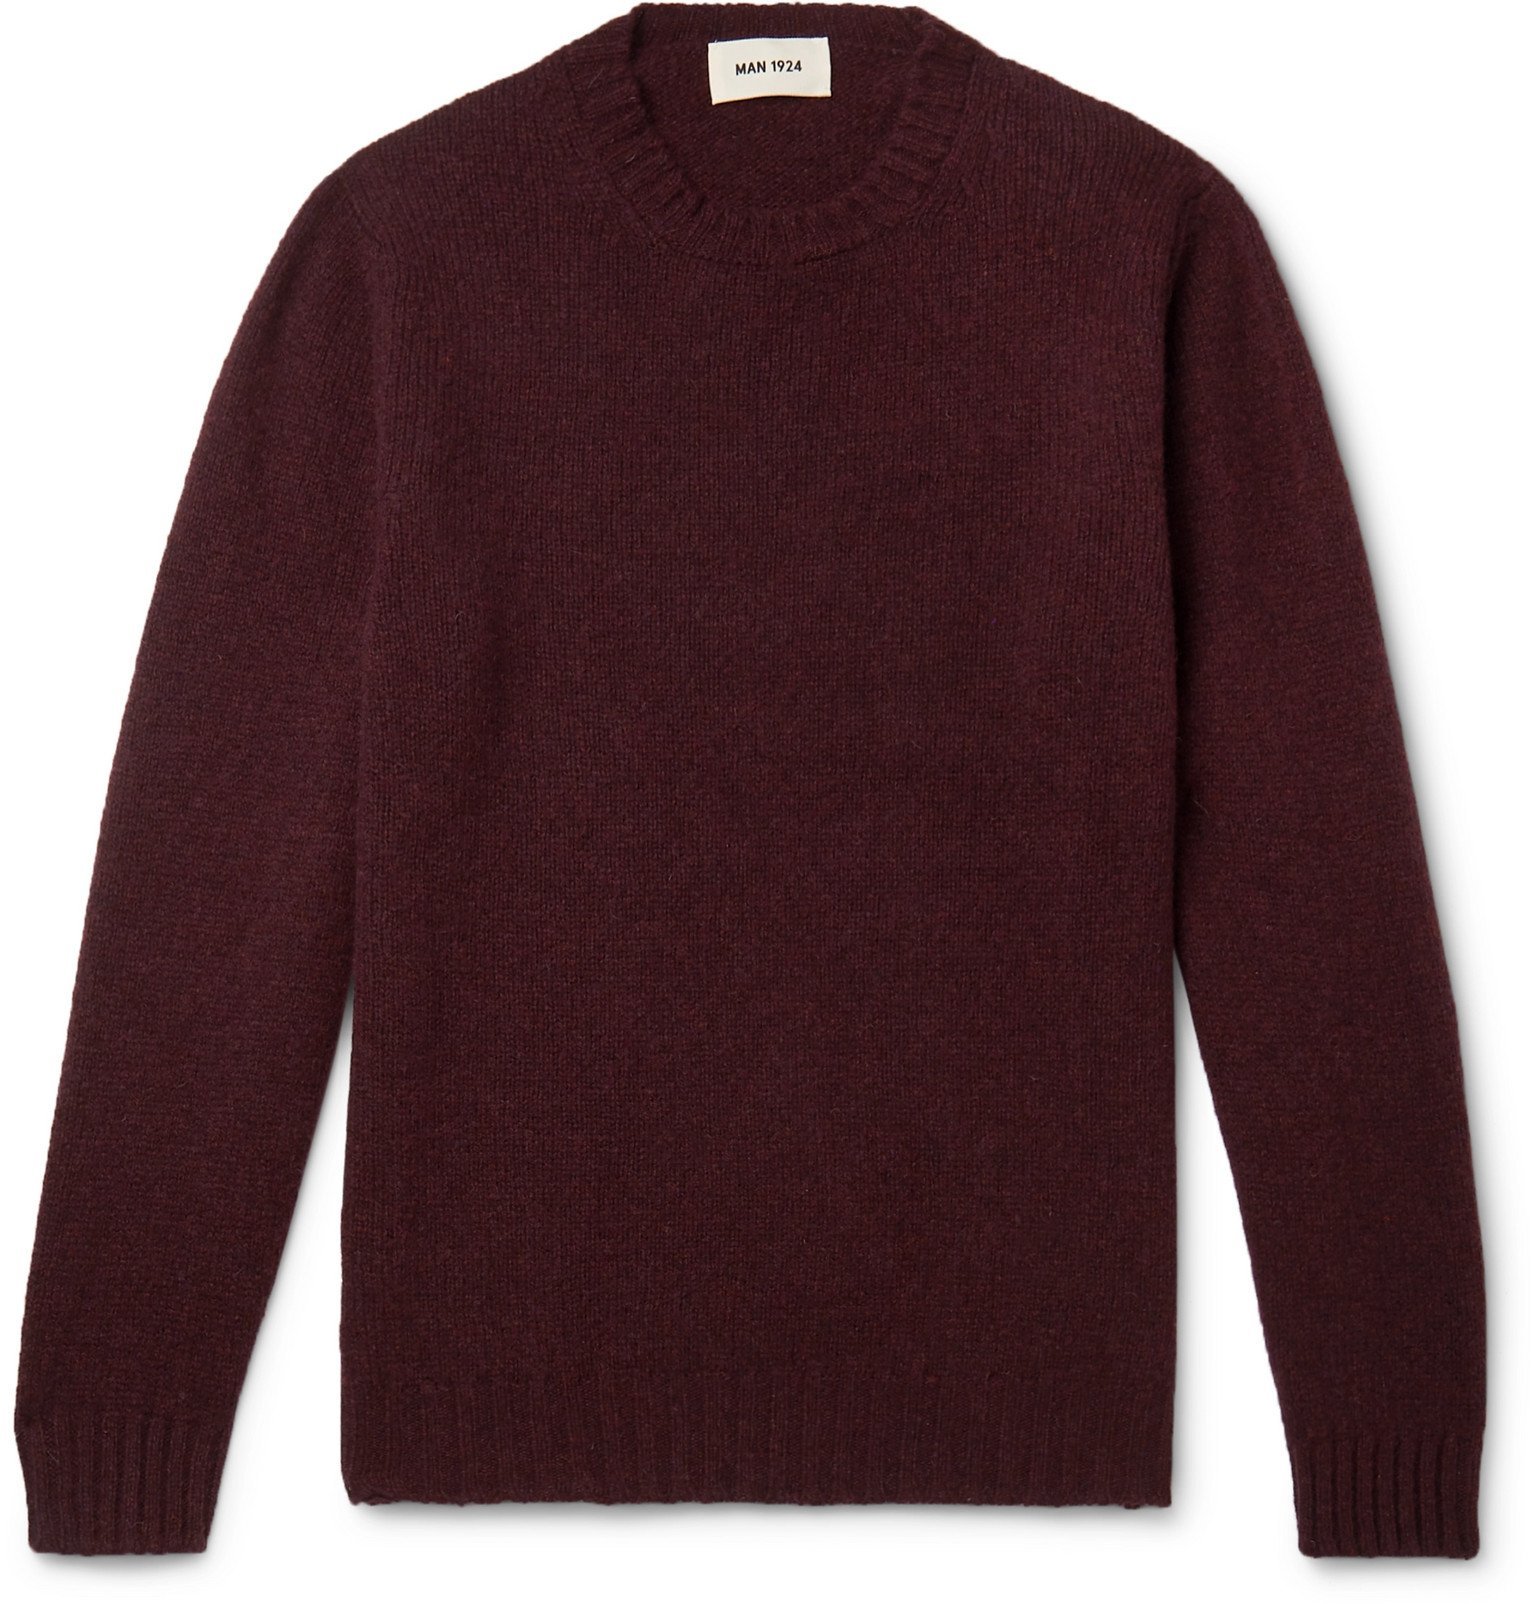 MAN 1924 - Shetland Wool Sweater - Burgundy MAN 1924